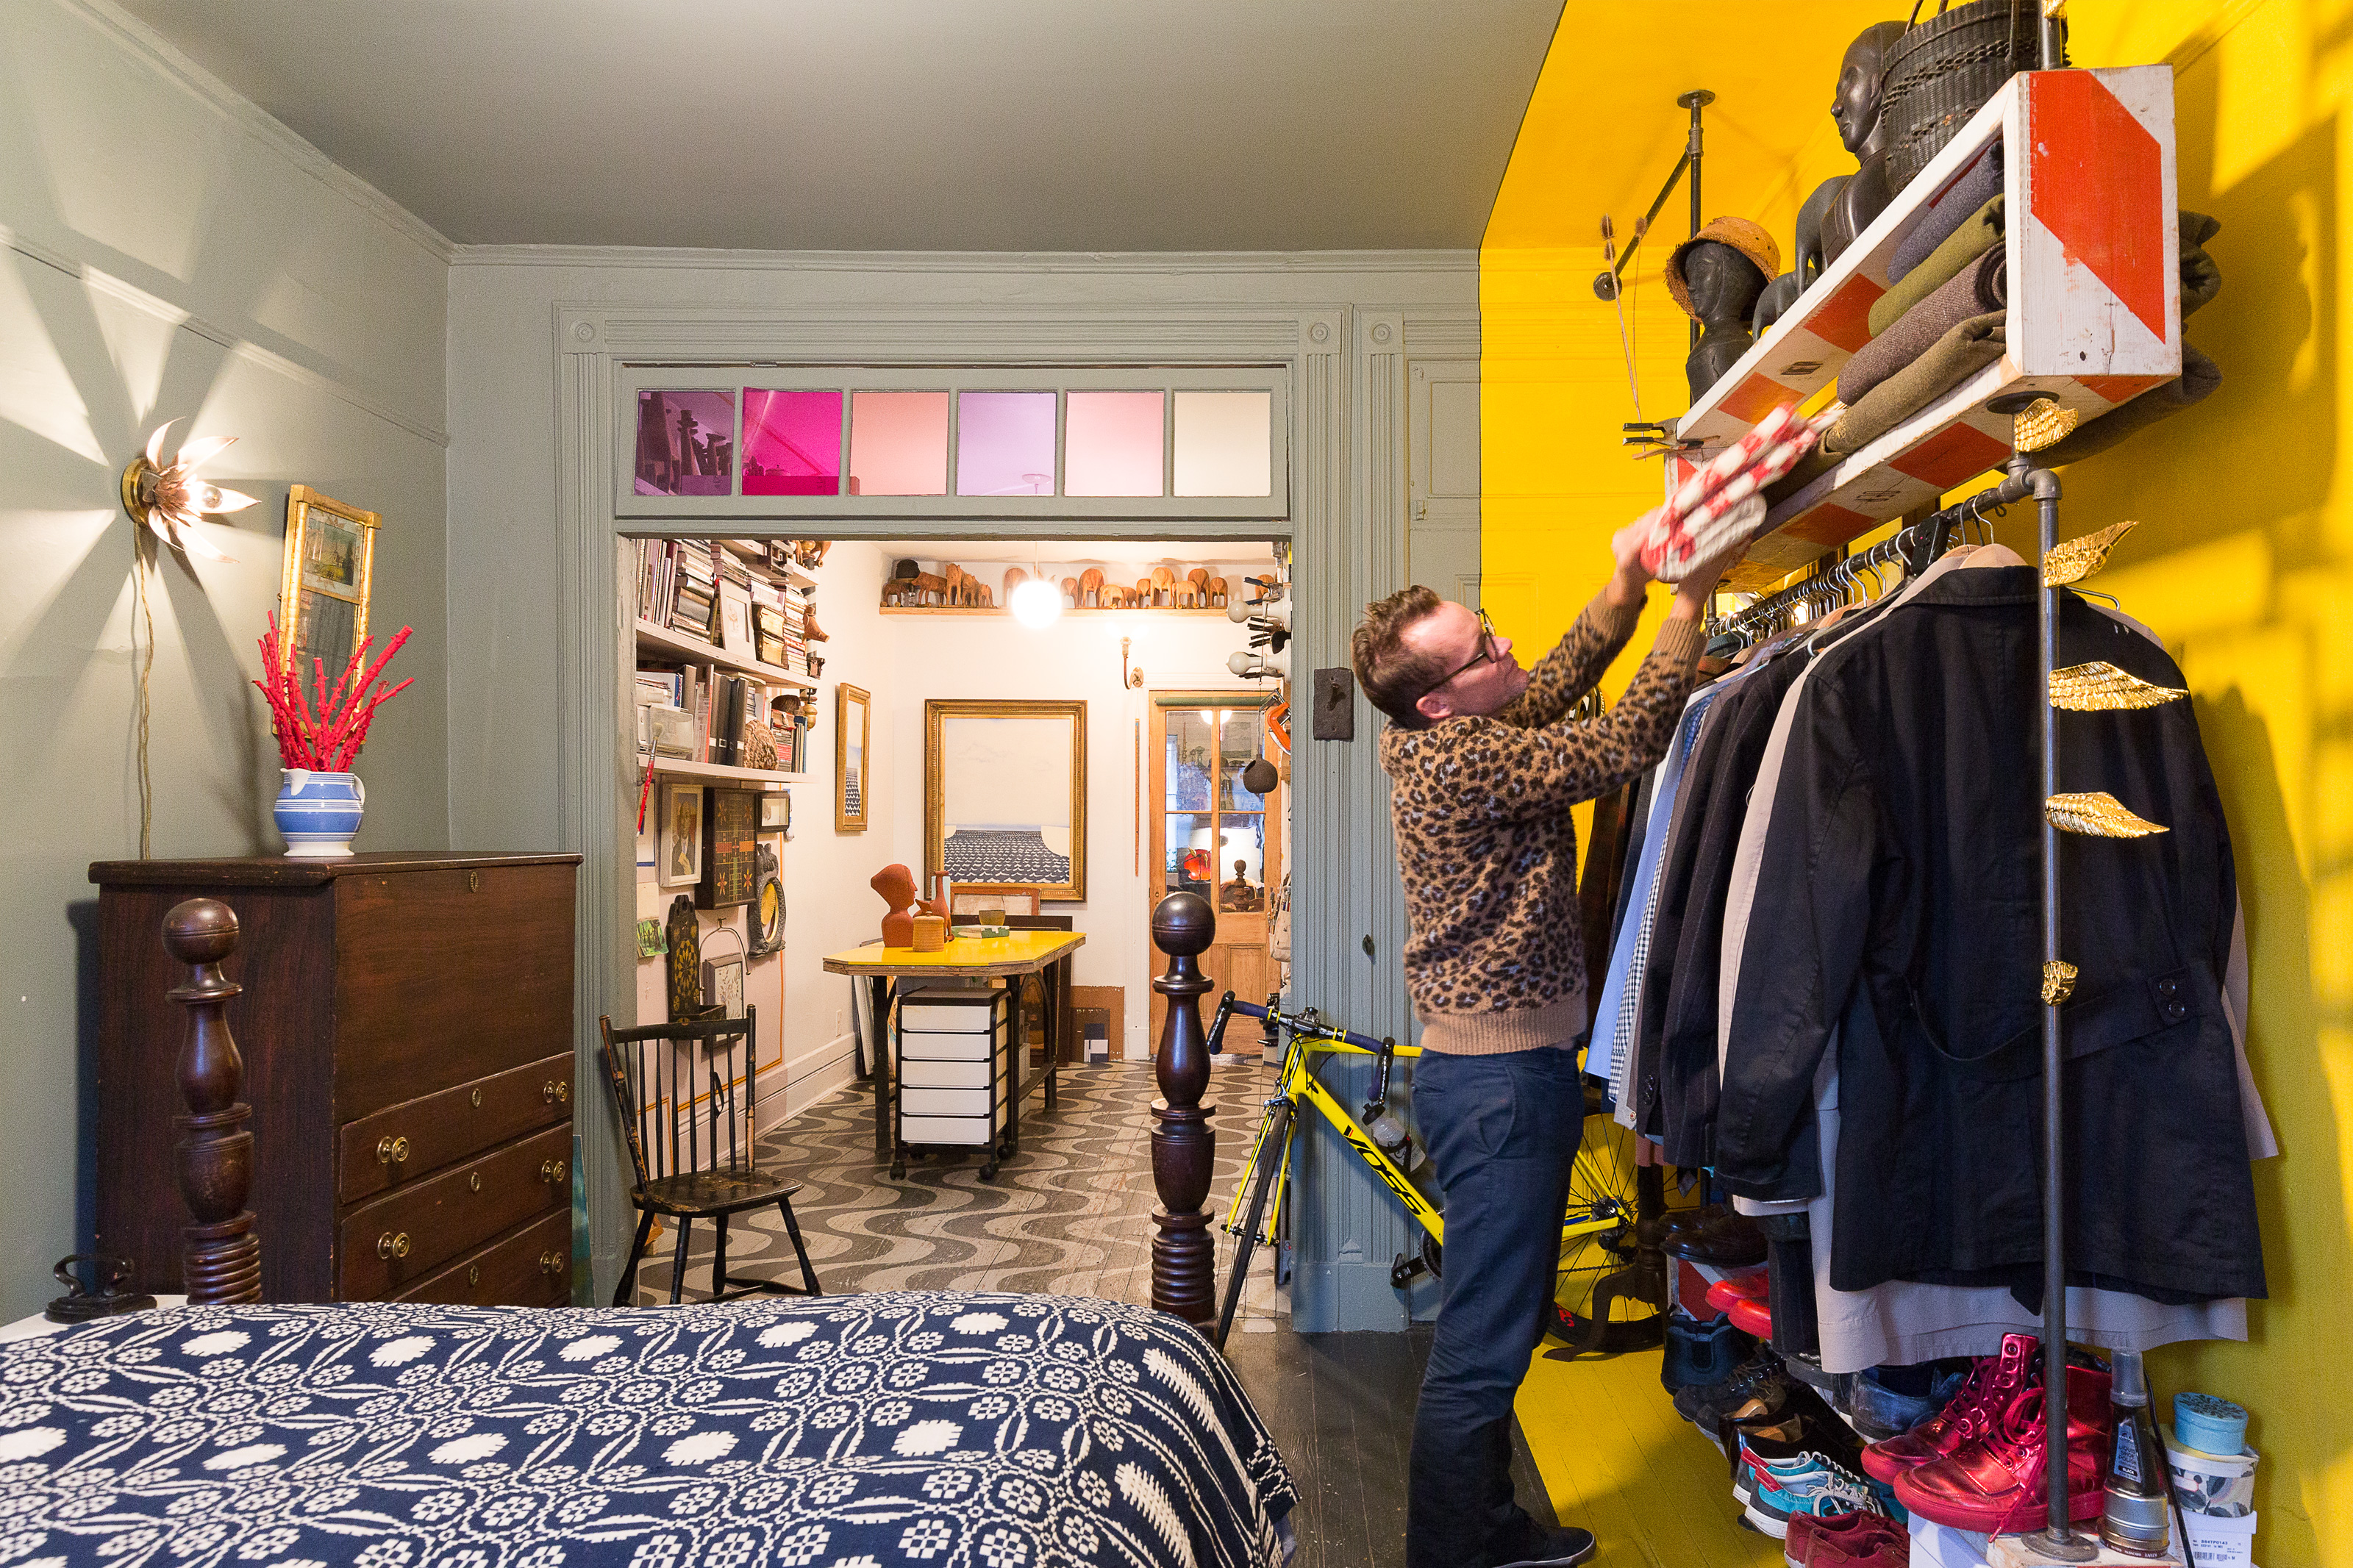 7 Genius IKEA Hacks That Will Double Your Closet Storage